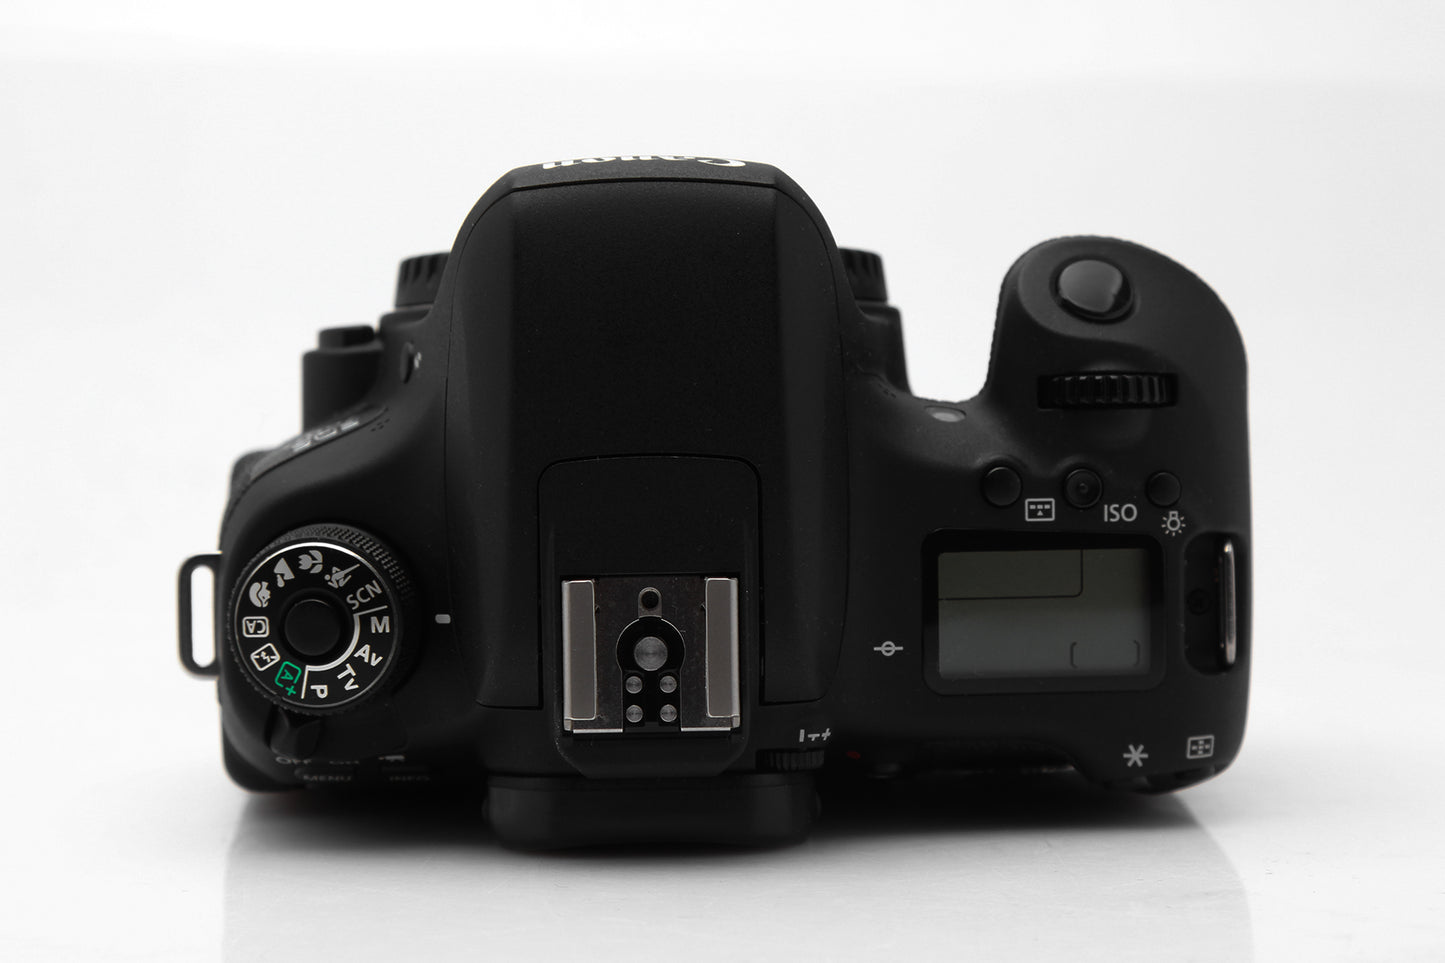 Used Canon 760D Camera Body